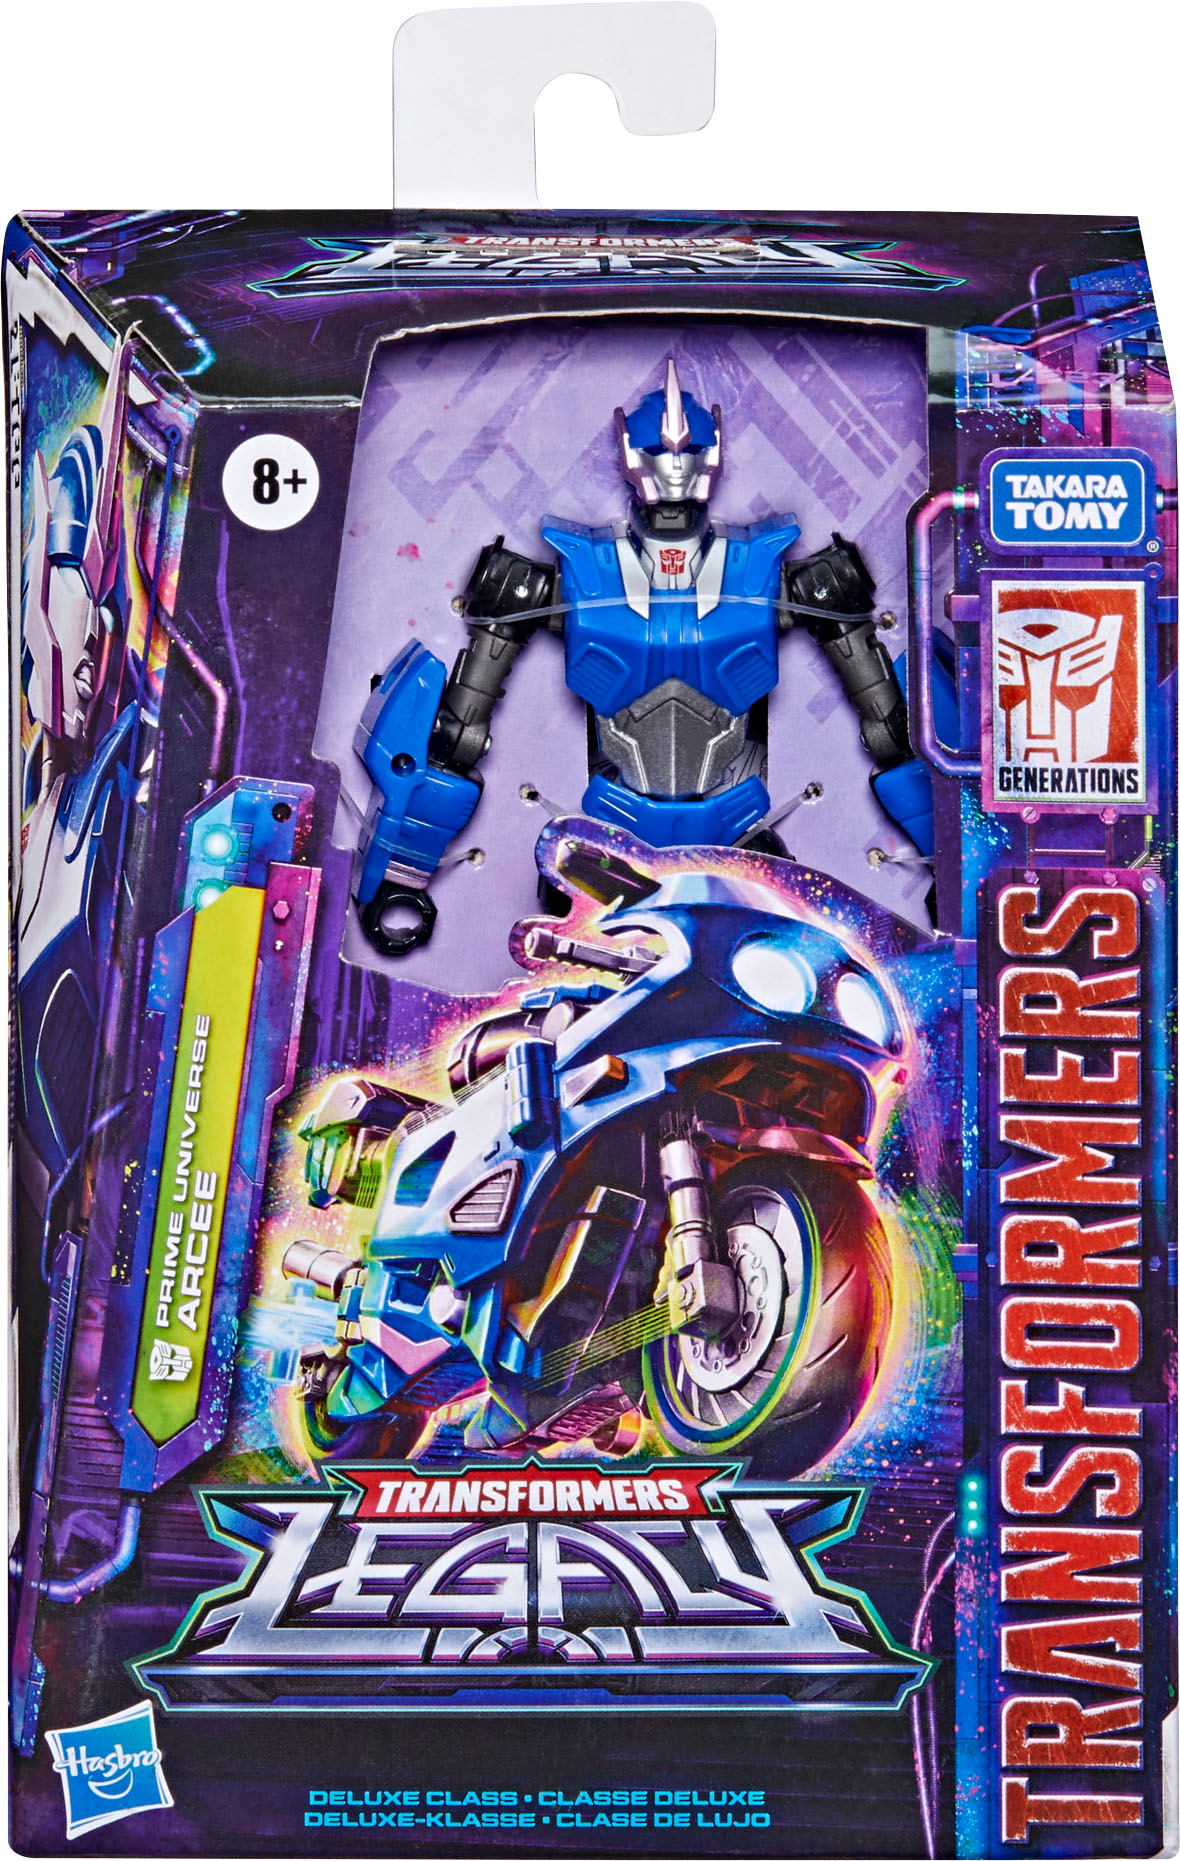 Hasbro] Arcee - Transformers: Prime (Robot Mode), My secon…